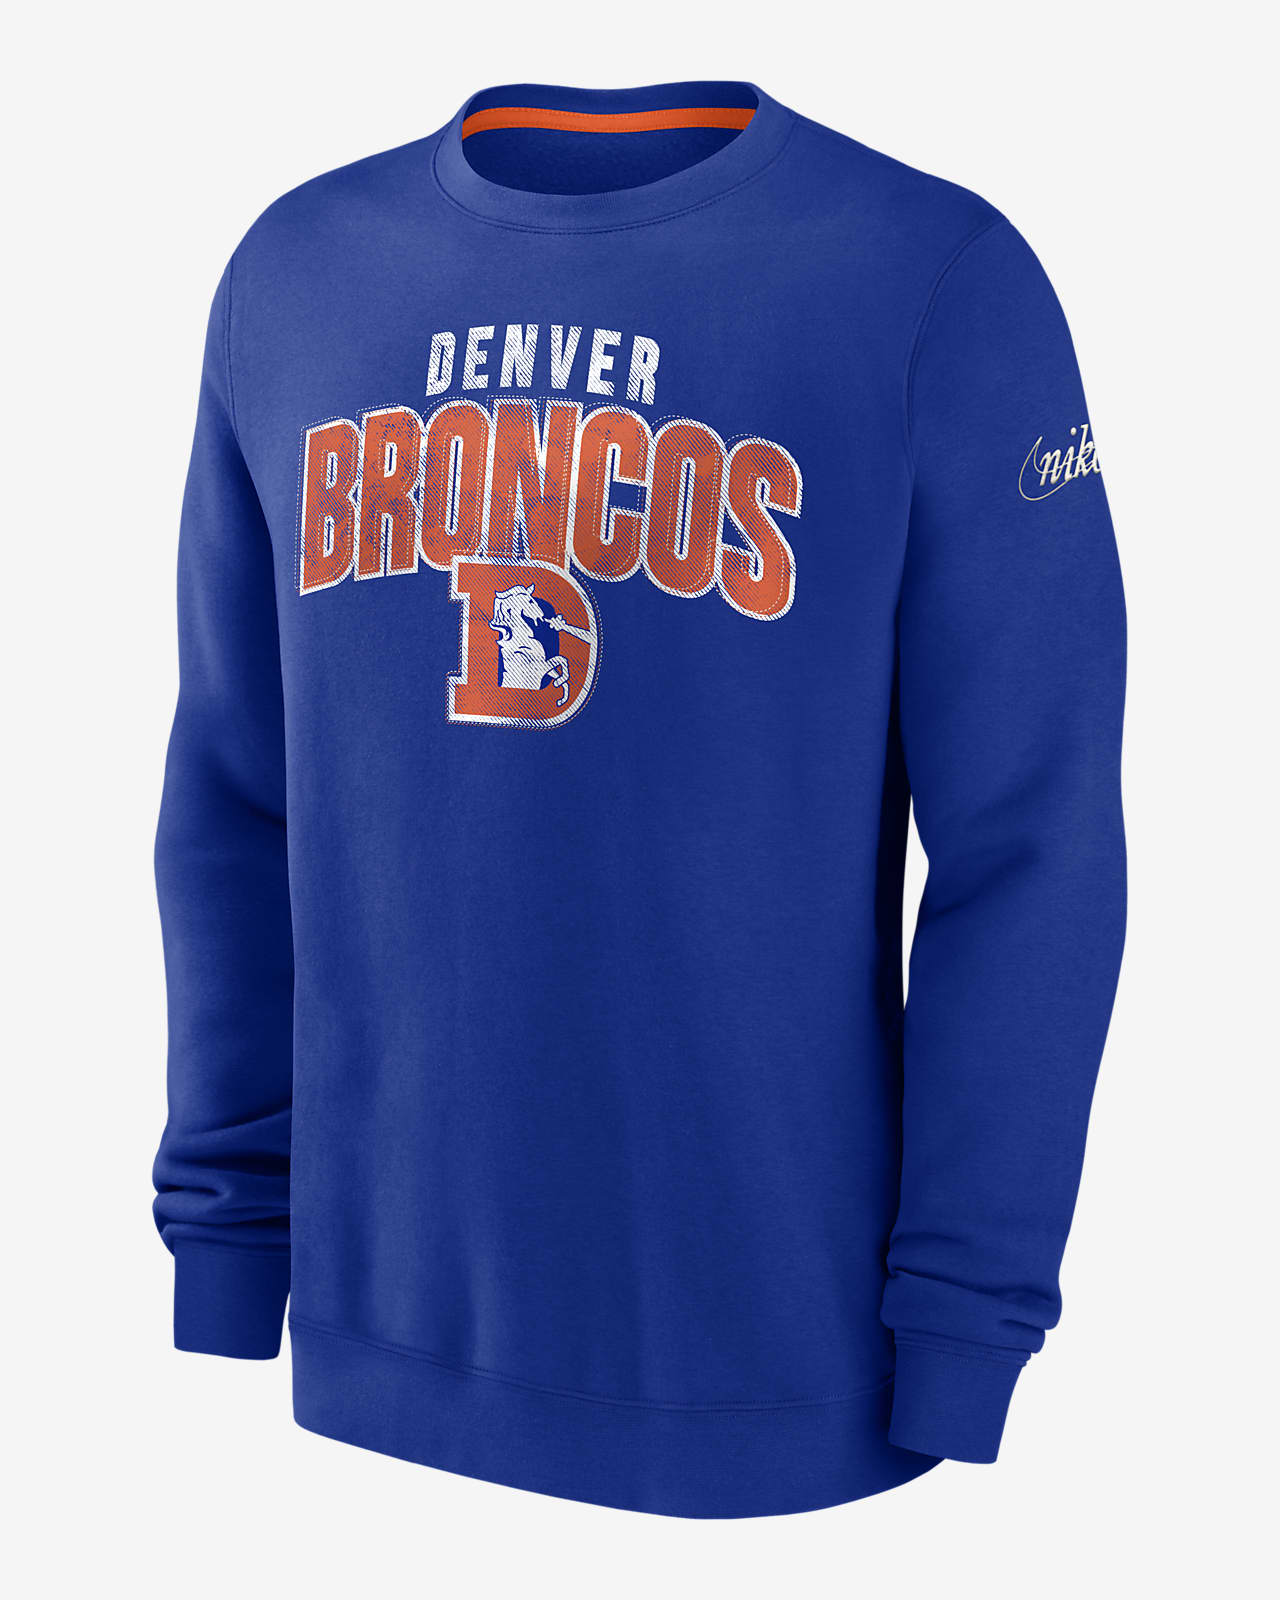 Men's Nike Royal Denver Broncos Rewind Club Pullover Sweatshirt Size: Small